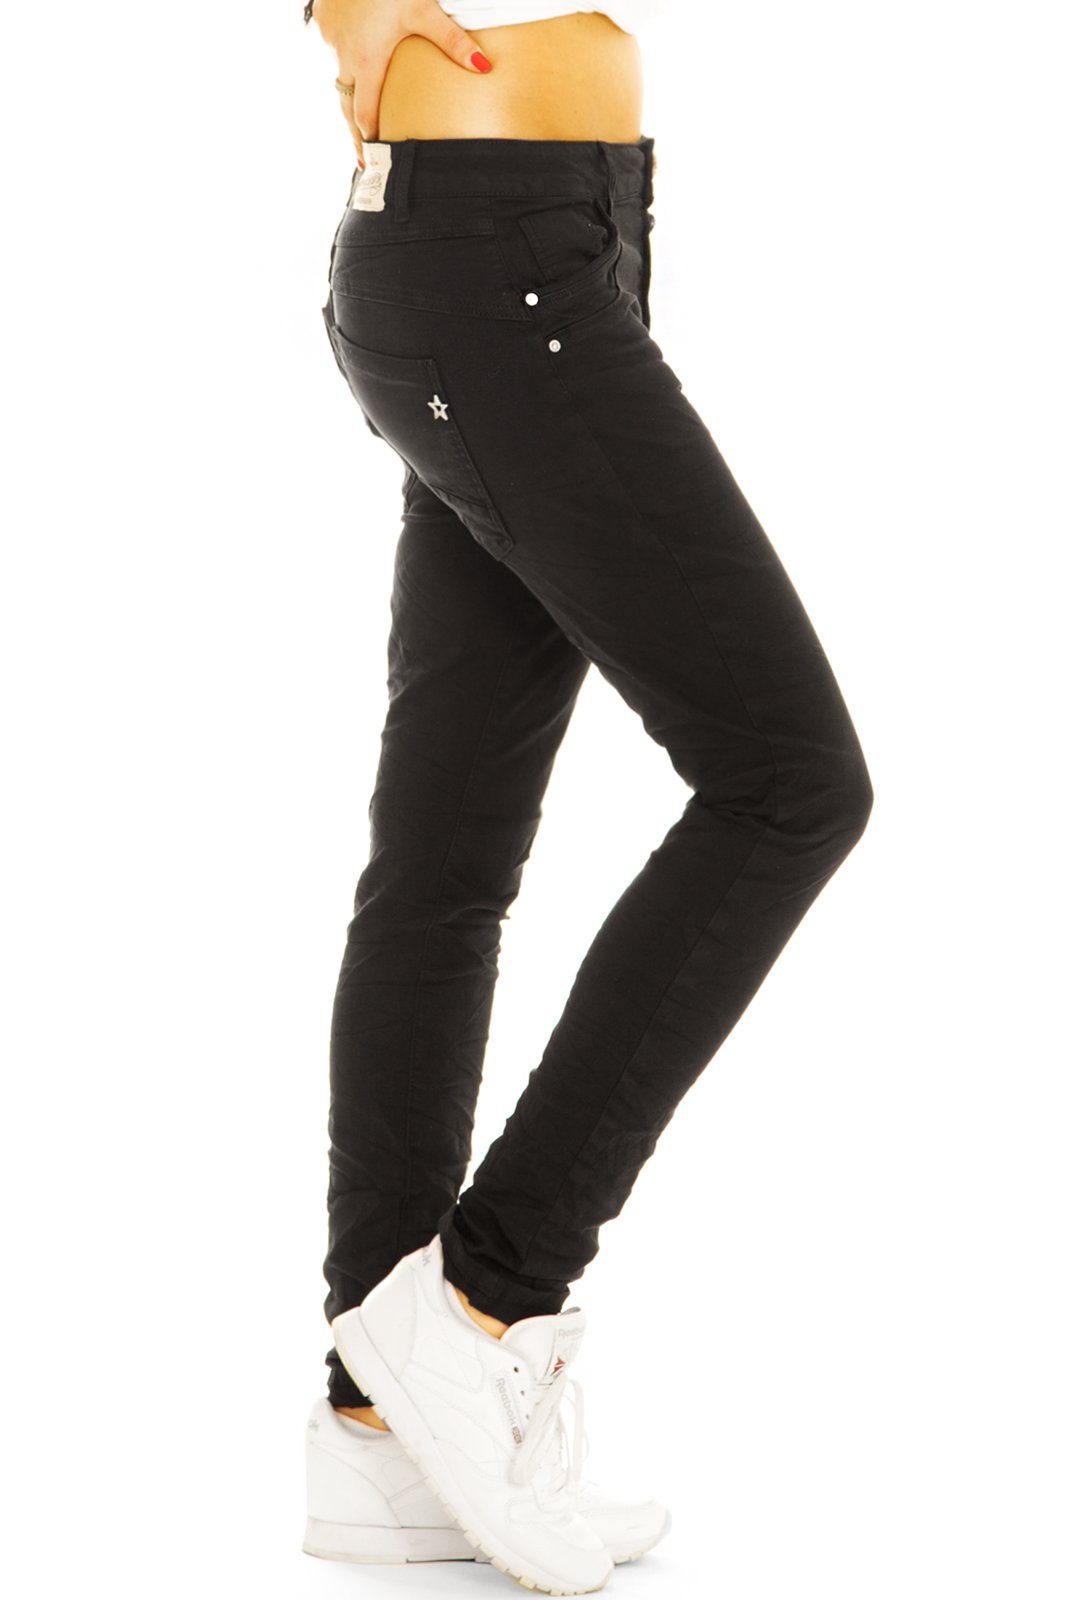 hüftige rise Damen - styled Low-rise-Jeans - Stretch-Anteil, Waist Hüftjeans j43l-1 Hose Low Röhrenjeans 5-Pocket-Style, Slim mit low hftig, Fit be low waist,